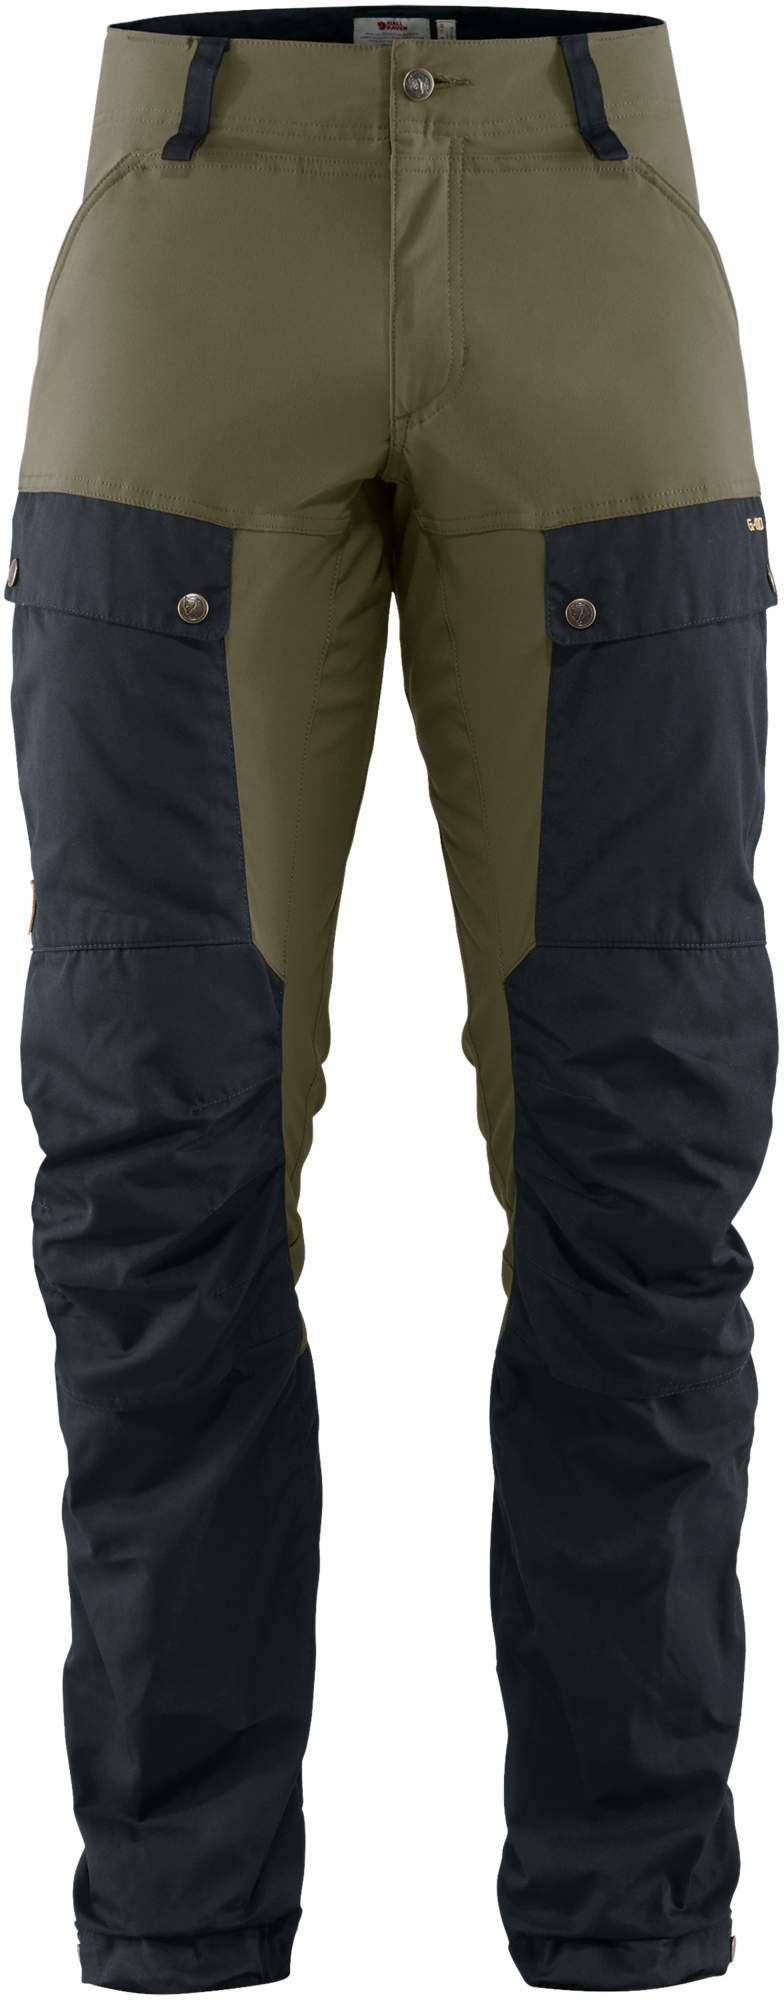 Keb Trousers Regular Navy/Olive 52